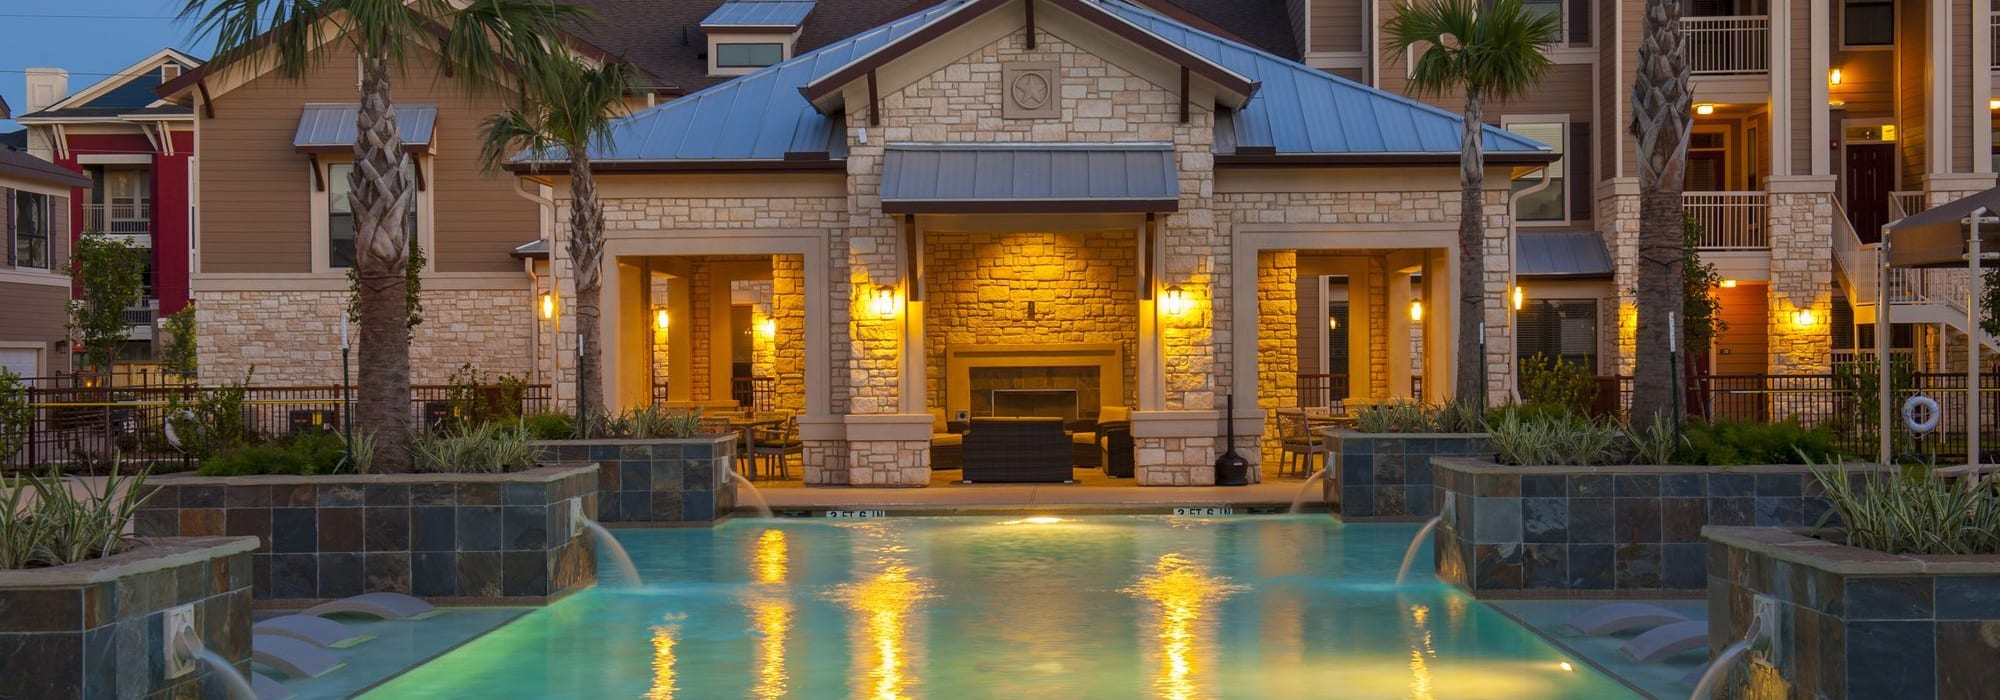 Hotel style pool at dusk at The Crossing at Katy Ranch in Katy, Texas